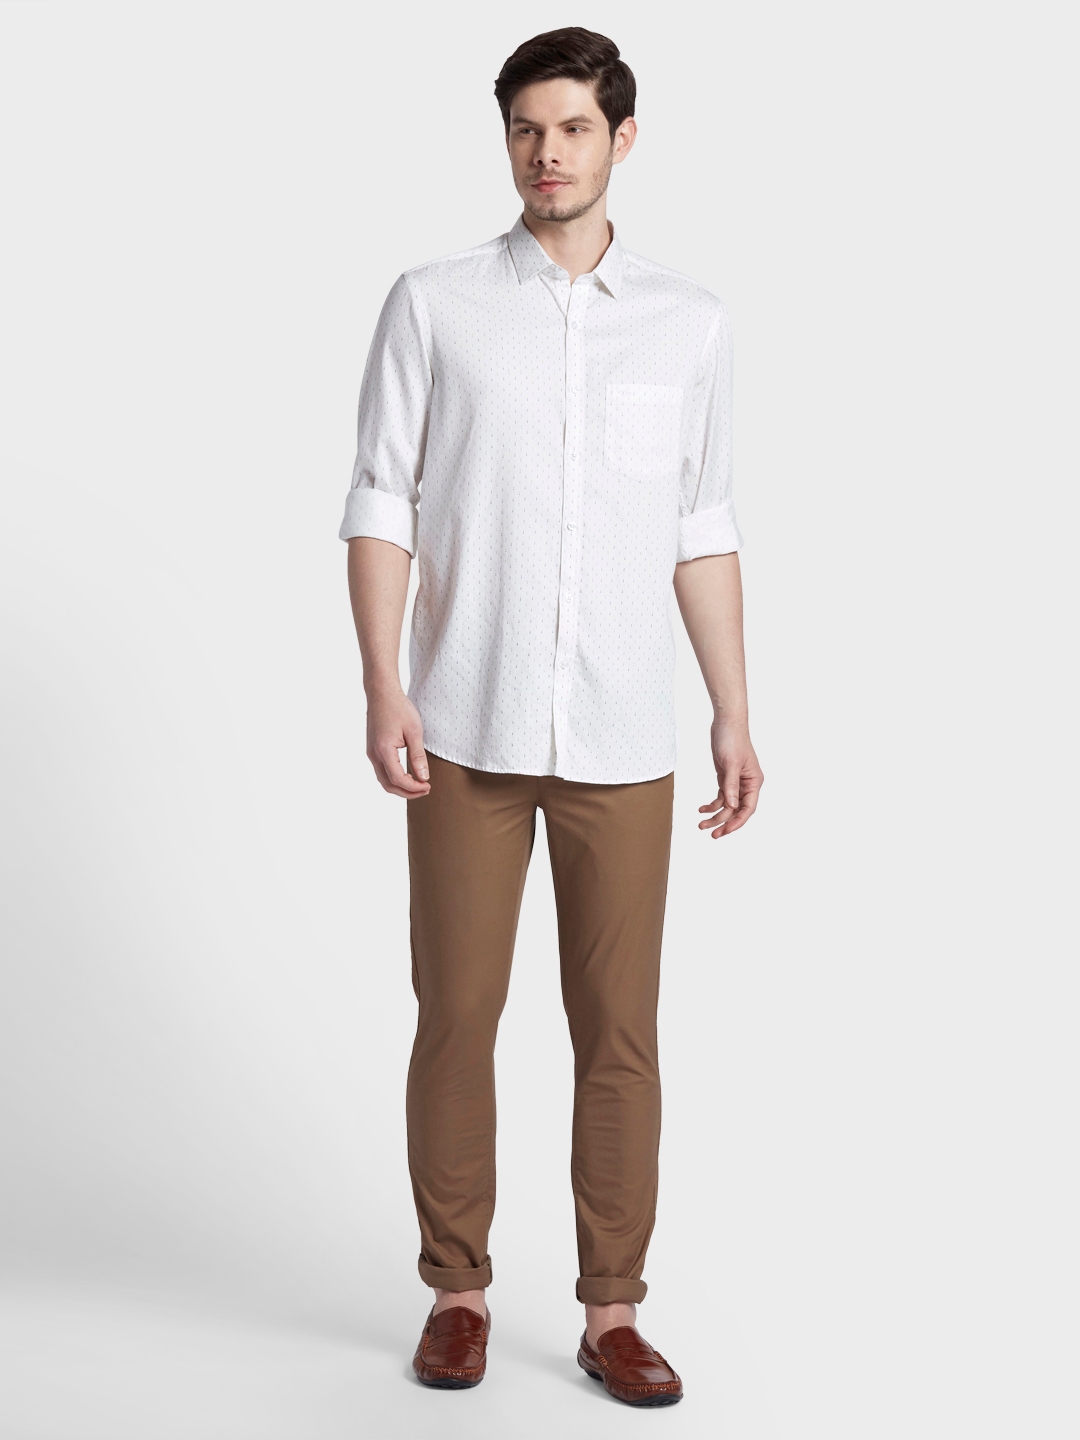 ColorPlus | ColorPlus White Shirt 4